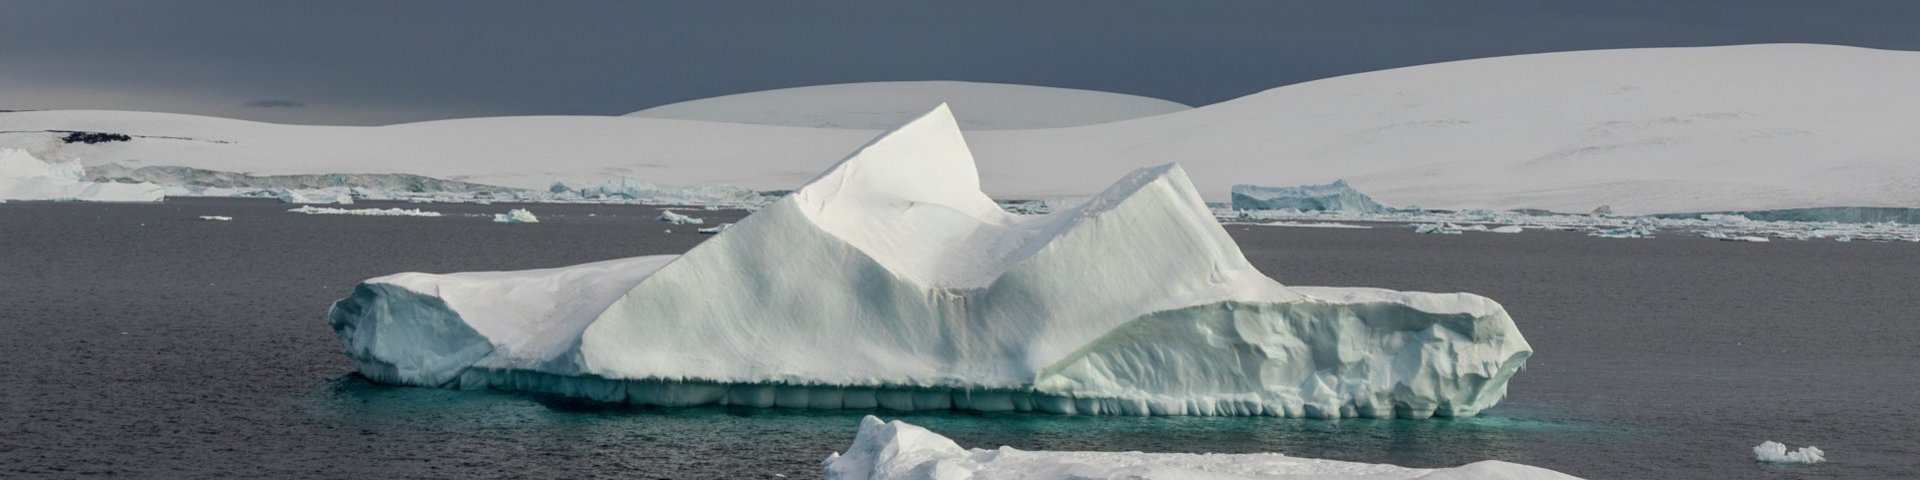 Eisberg im Antarctic Sund